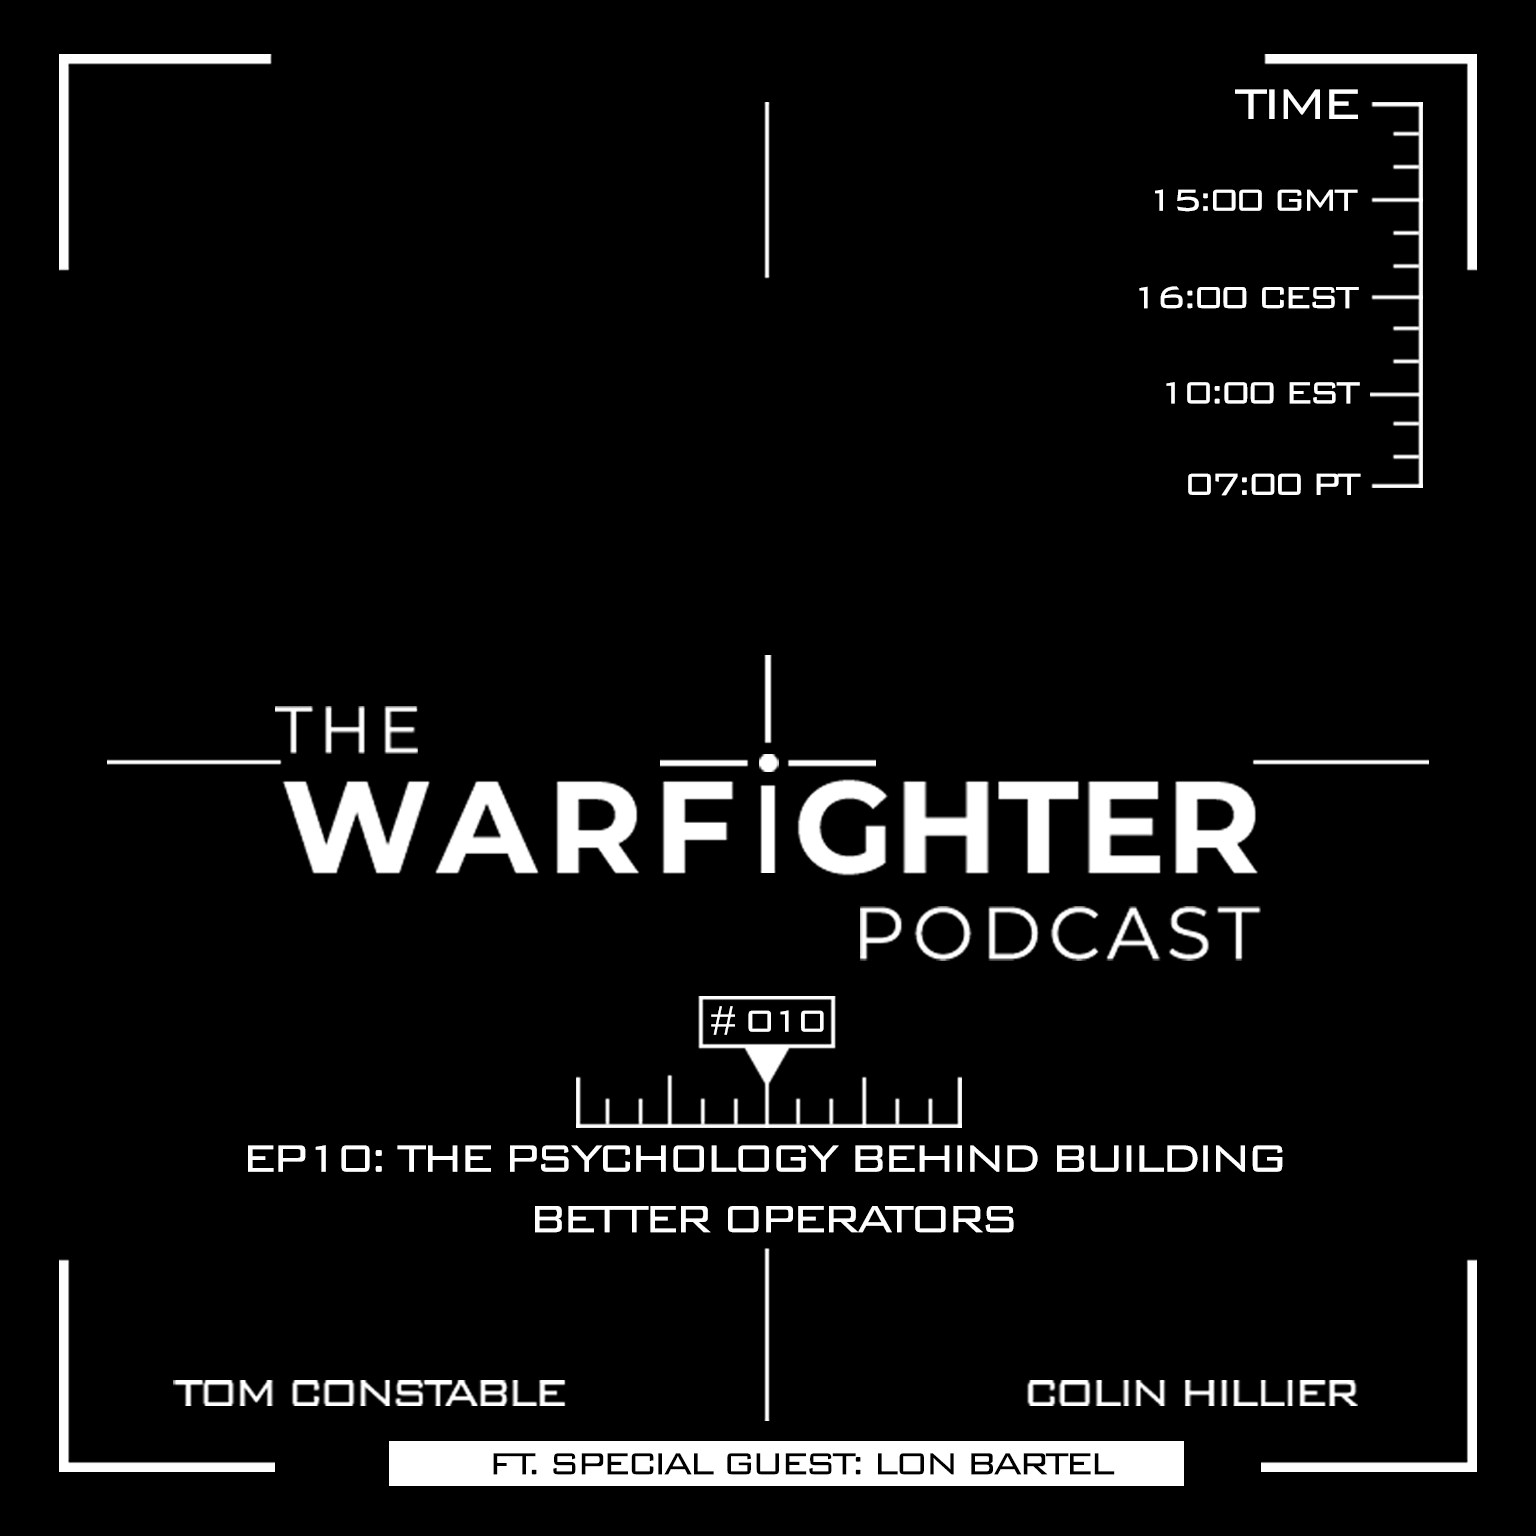 Artwork for podcast Warfighter Podcast